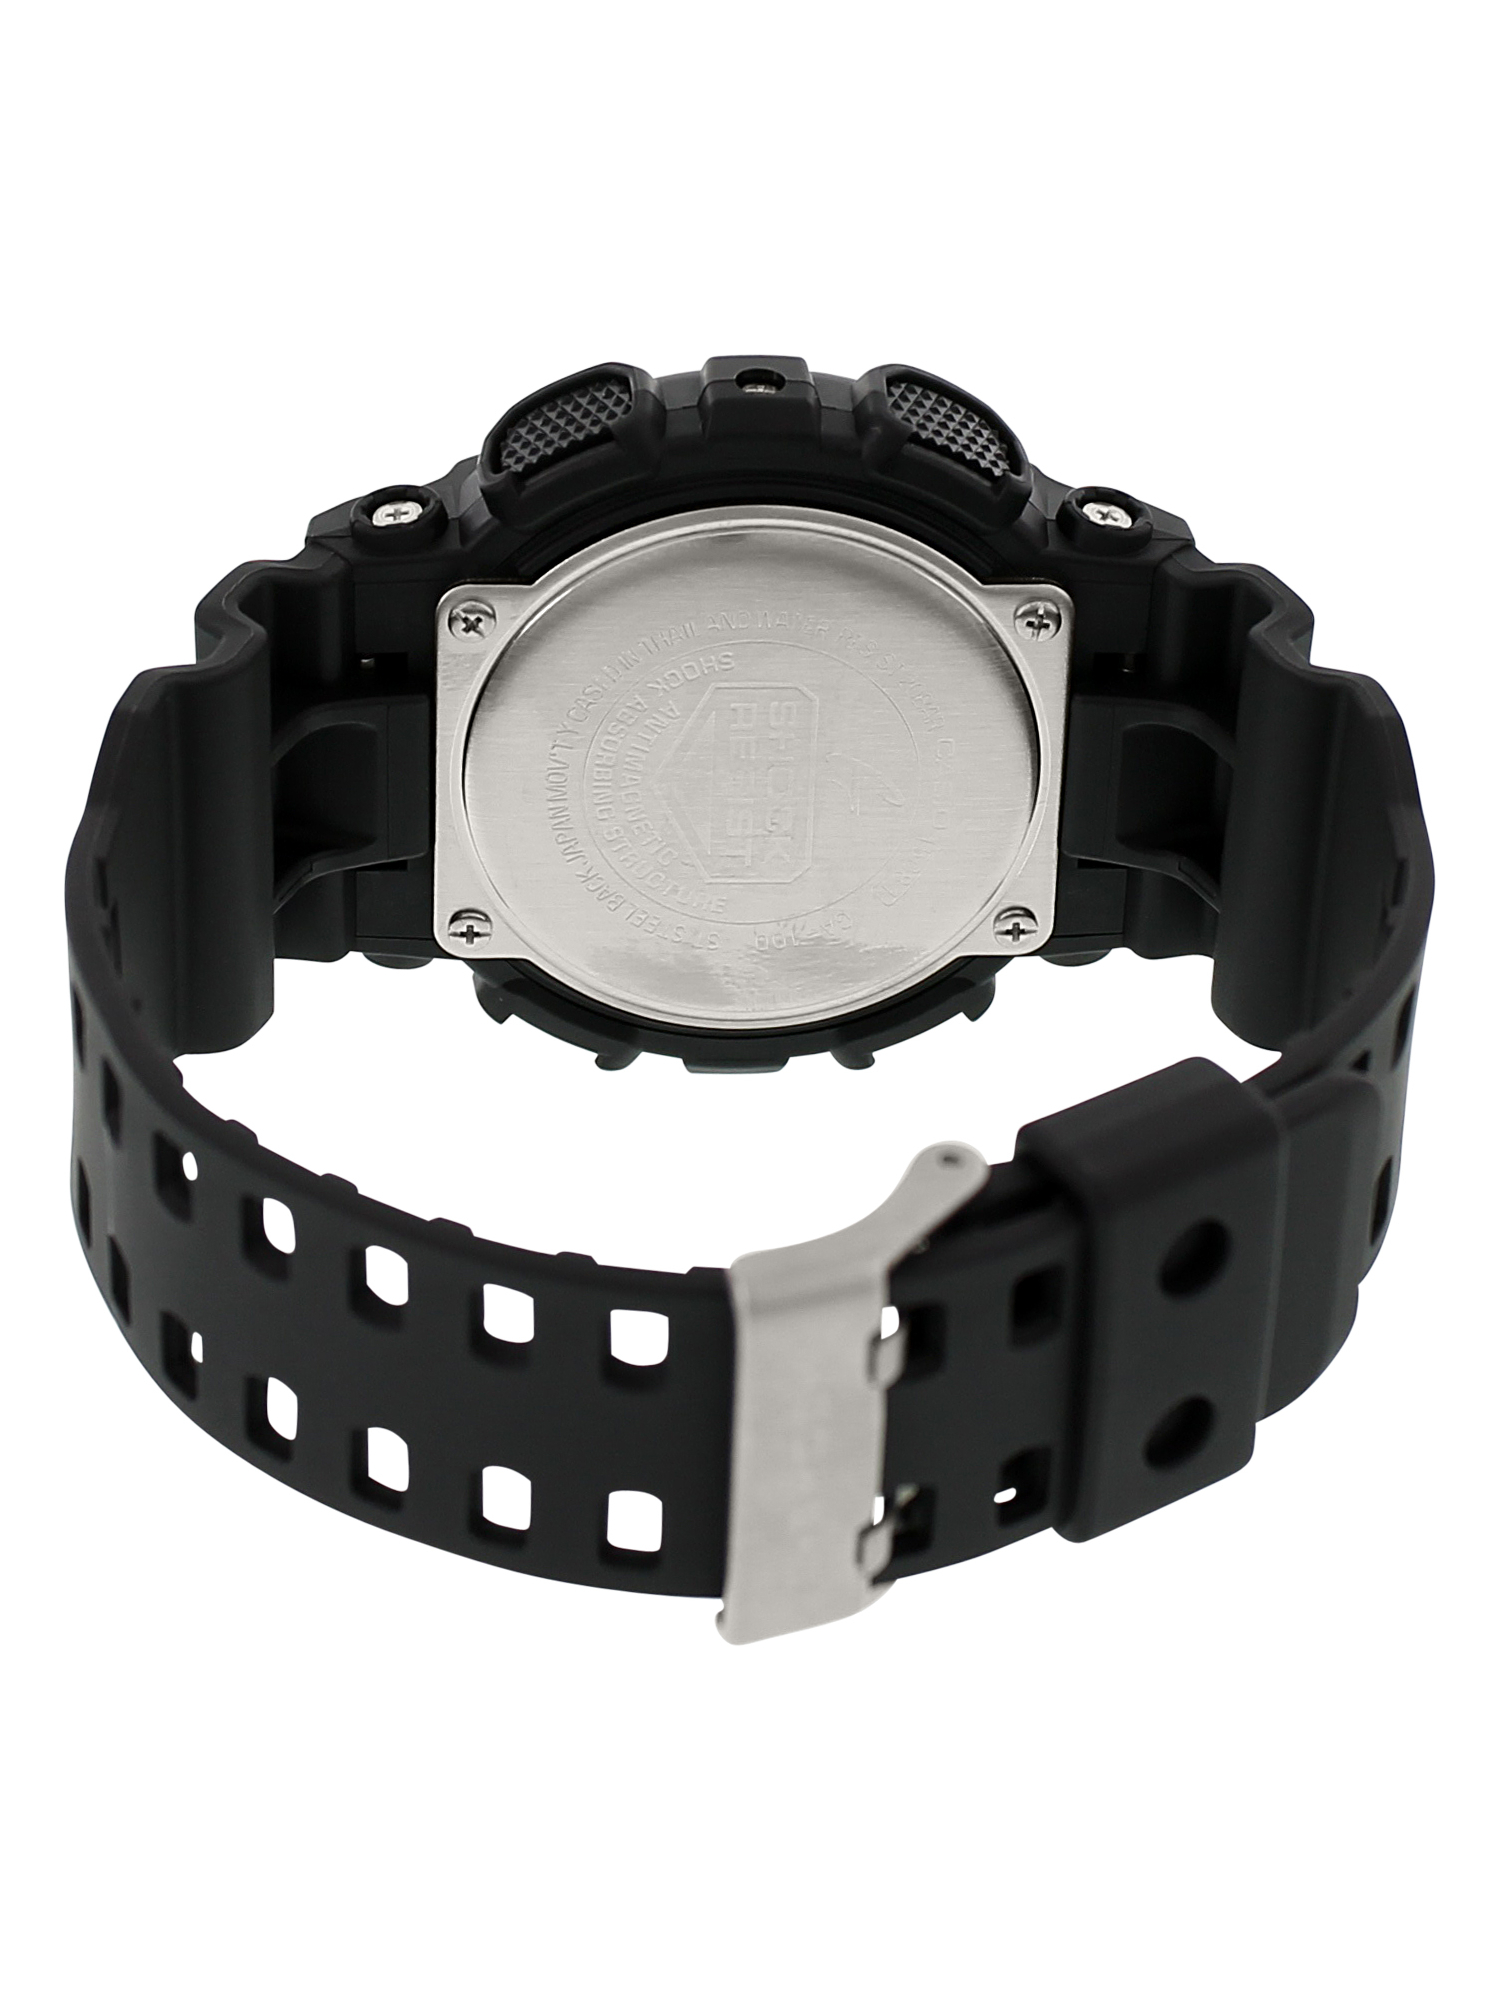 Casio Men's G-Shock Black Dial Watch - GA100-1A1 - image 2 of 3